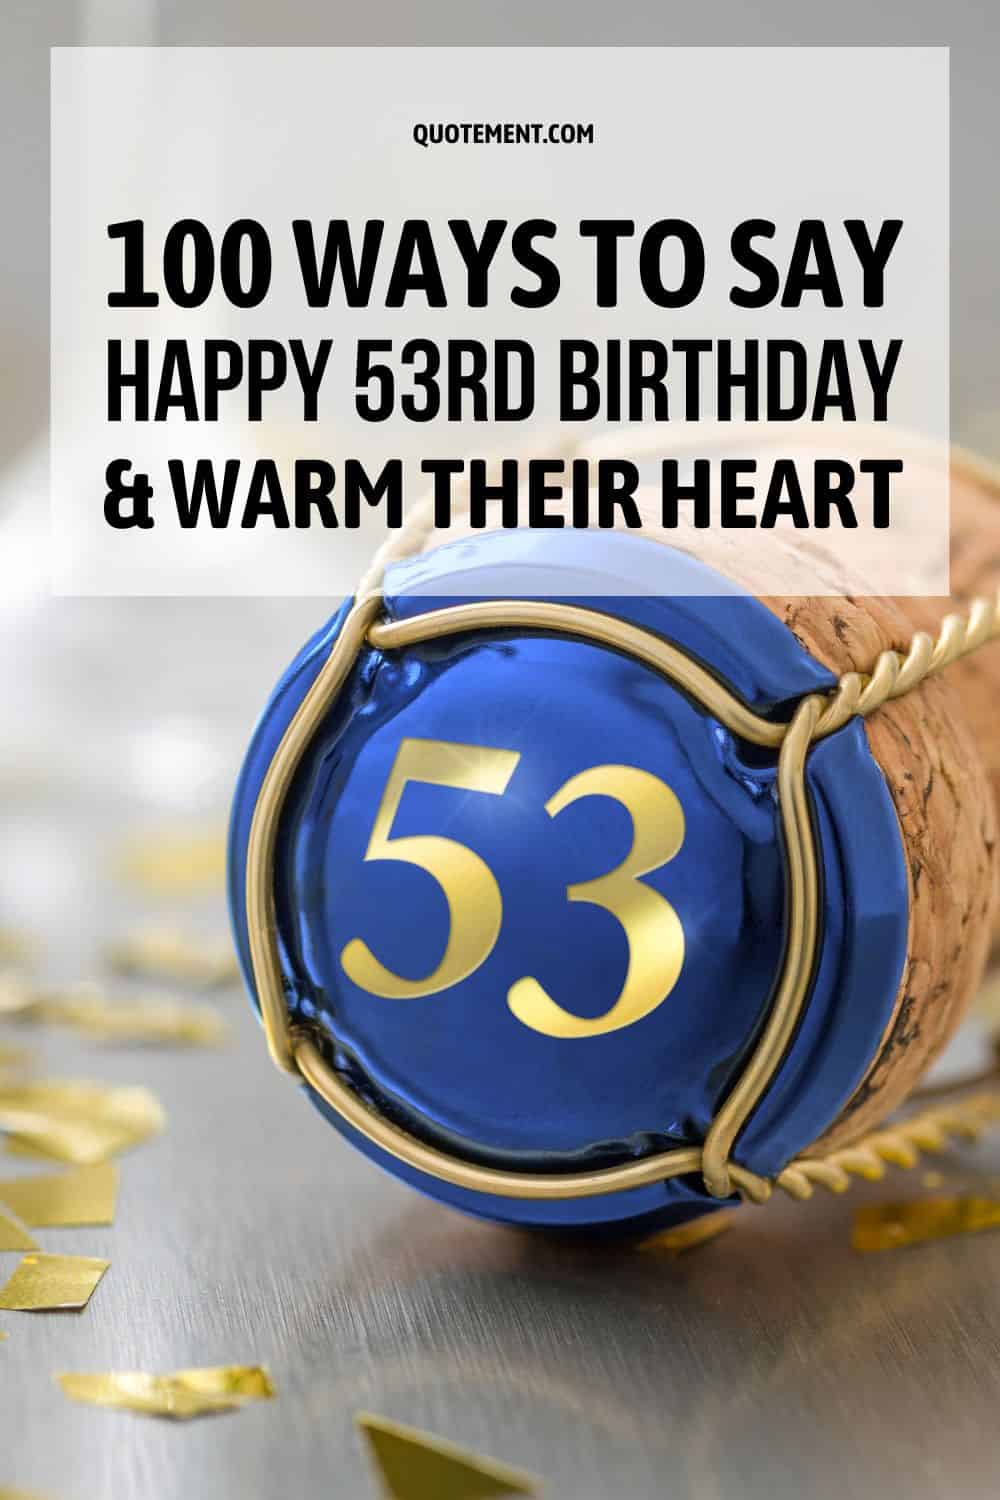 100 Ways To Say Happy 53rd Birthday & Warm Their Heart
